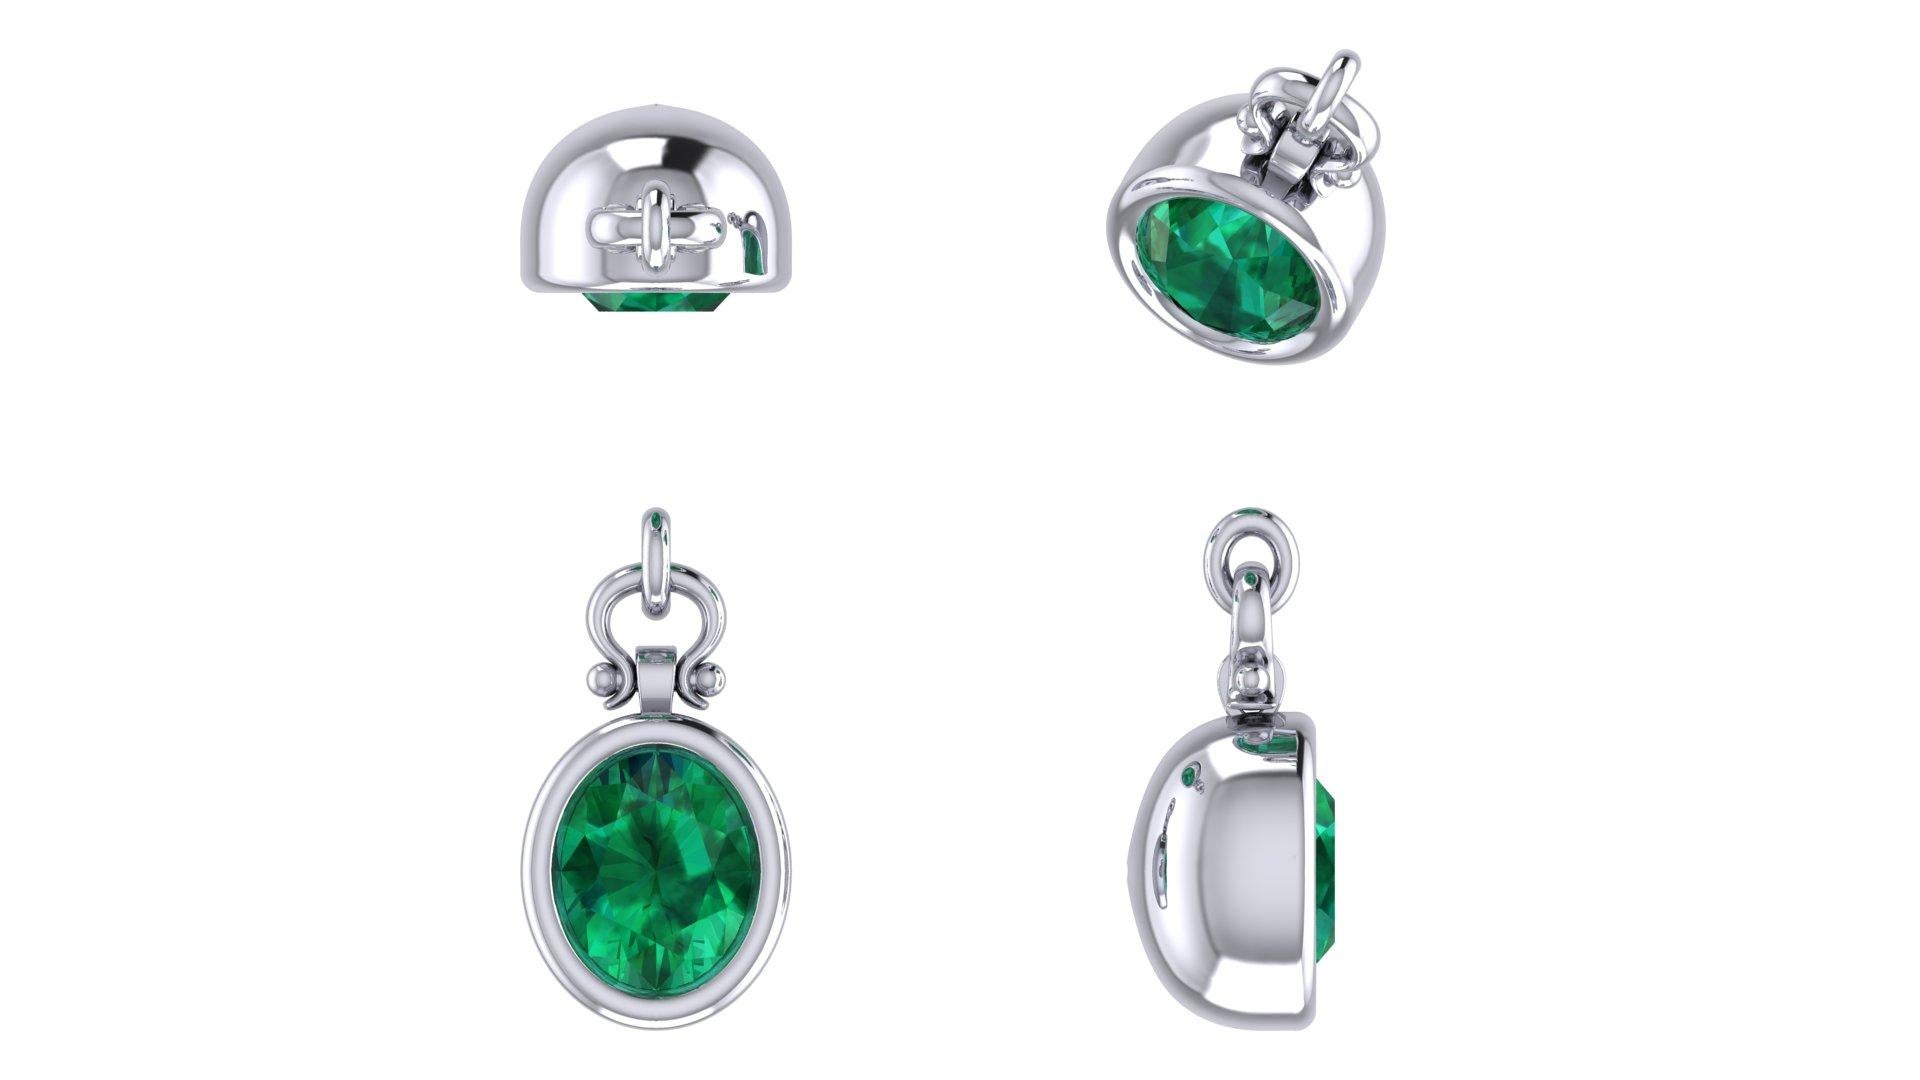 IGITL Certified 2.69 Carat Oval Cut Emerald Pendant Necklace in 18k For Sale 4